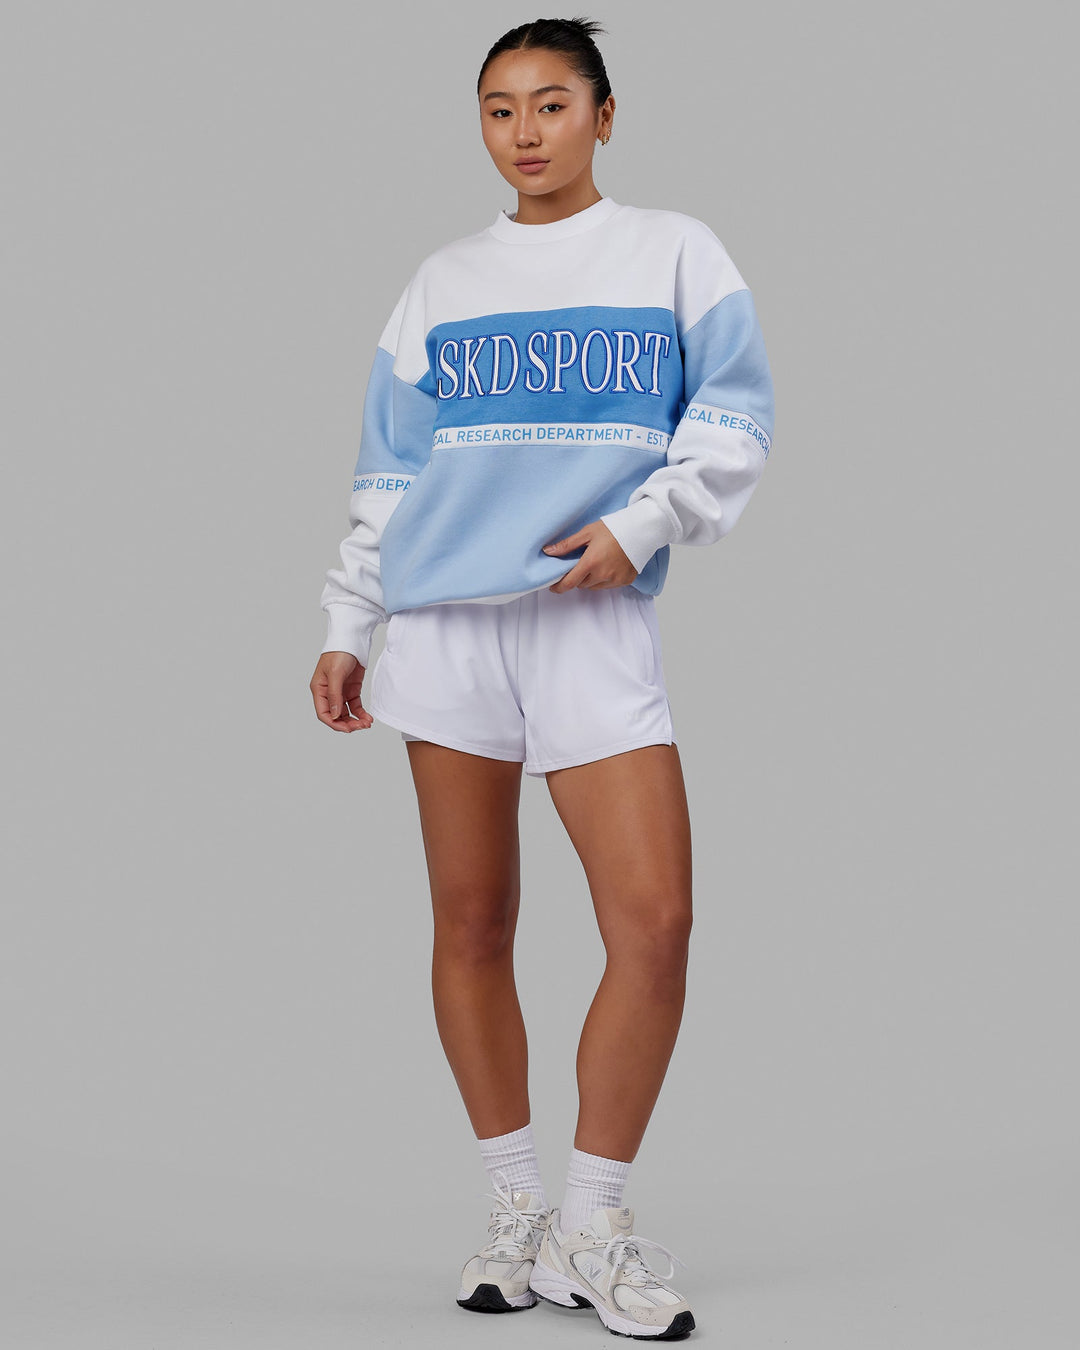 Unisex Sportif Sweater Oversize - Windsurfer-Azure Blue